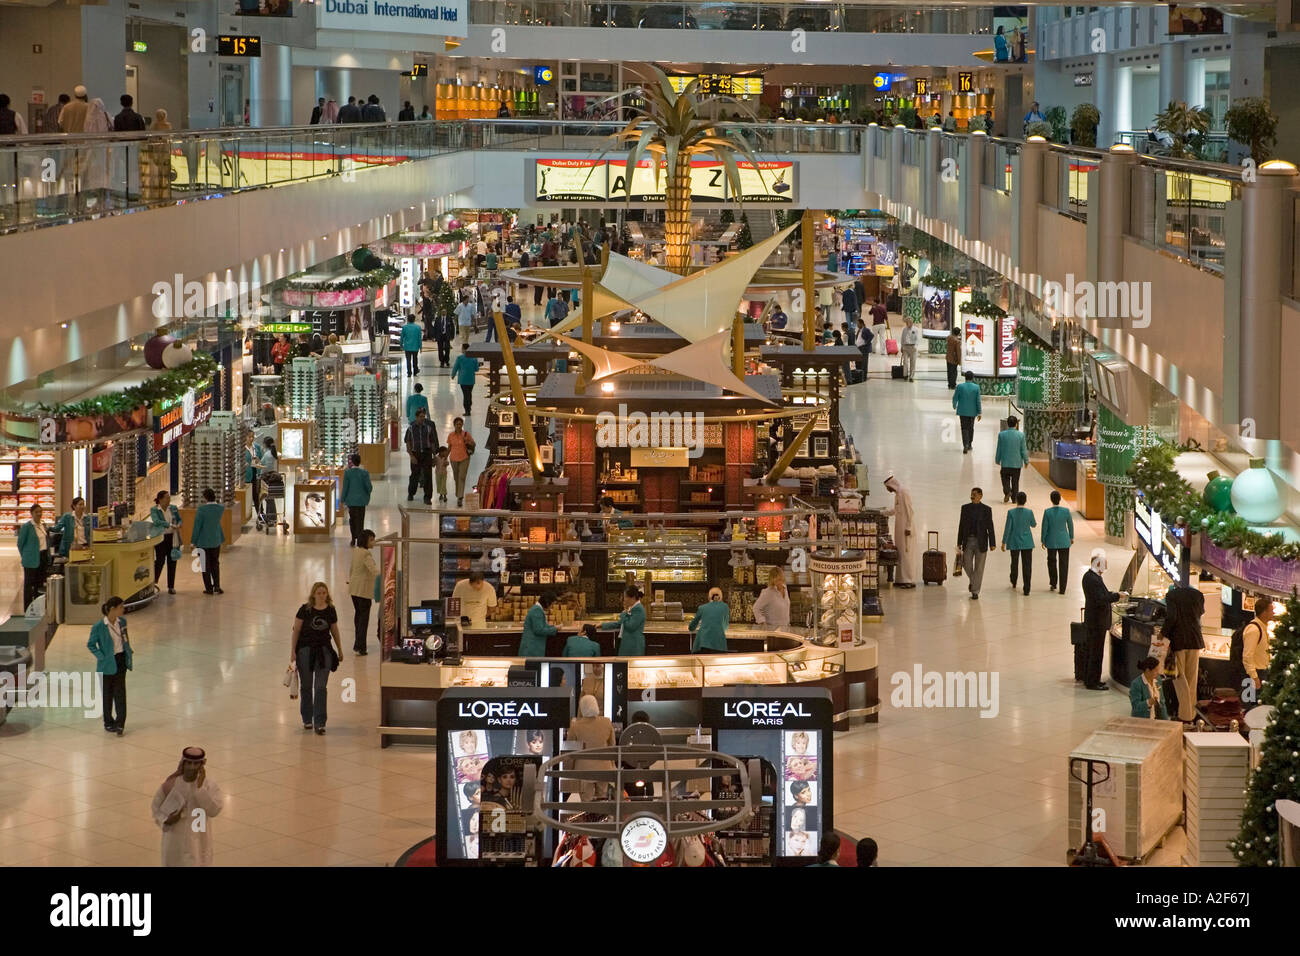 Dubai International Airport Dubai United Arab Emirates terminal duty free shopping zone Stock Photo